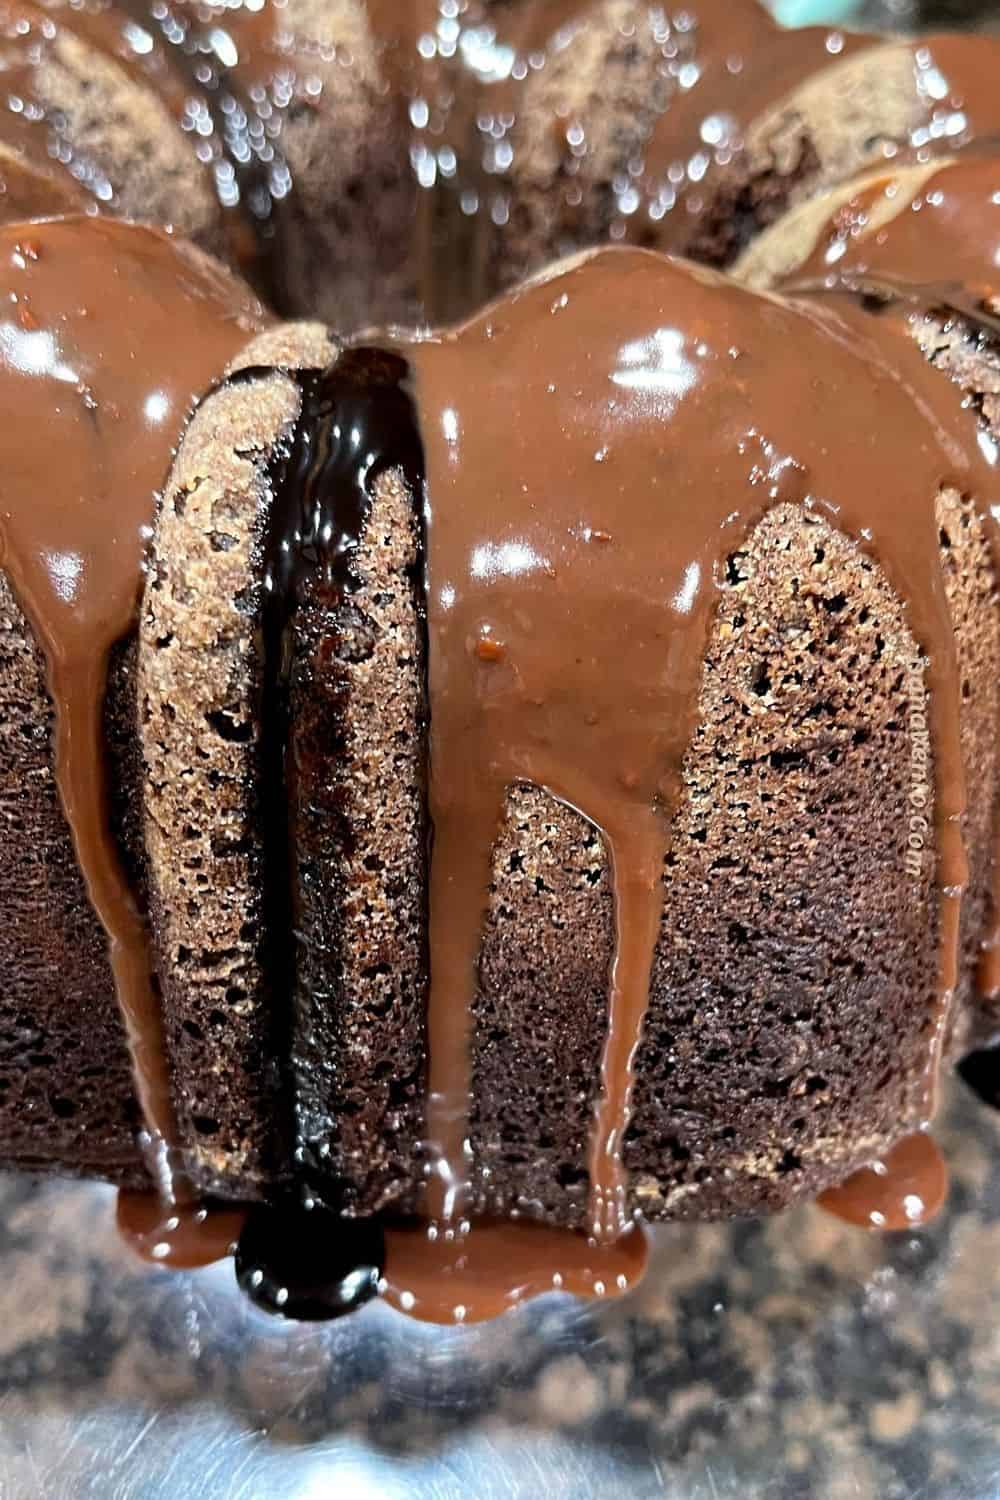 Double Chocolate Brownie Fudge Cake ith ganache and syrup